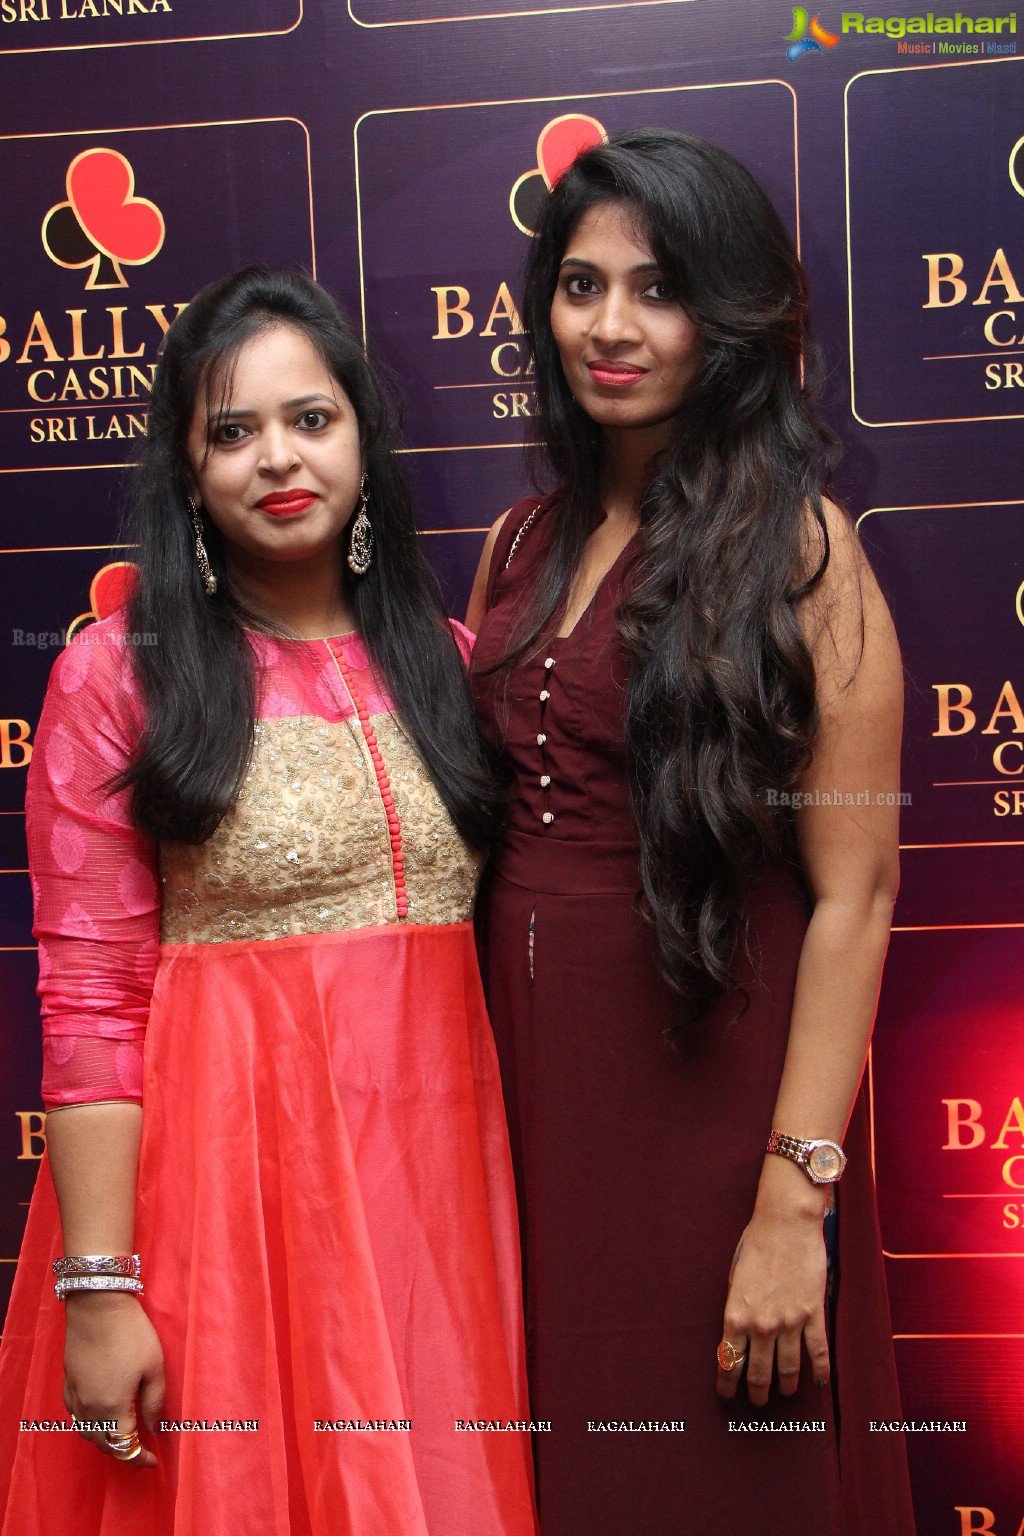 Bally's Casino Sri Lanka Event in Hyderabad